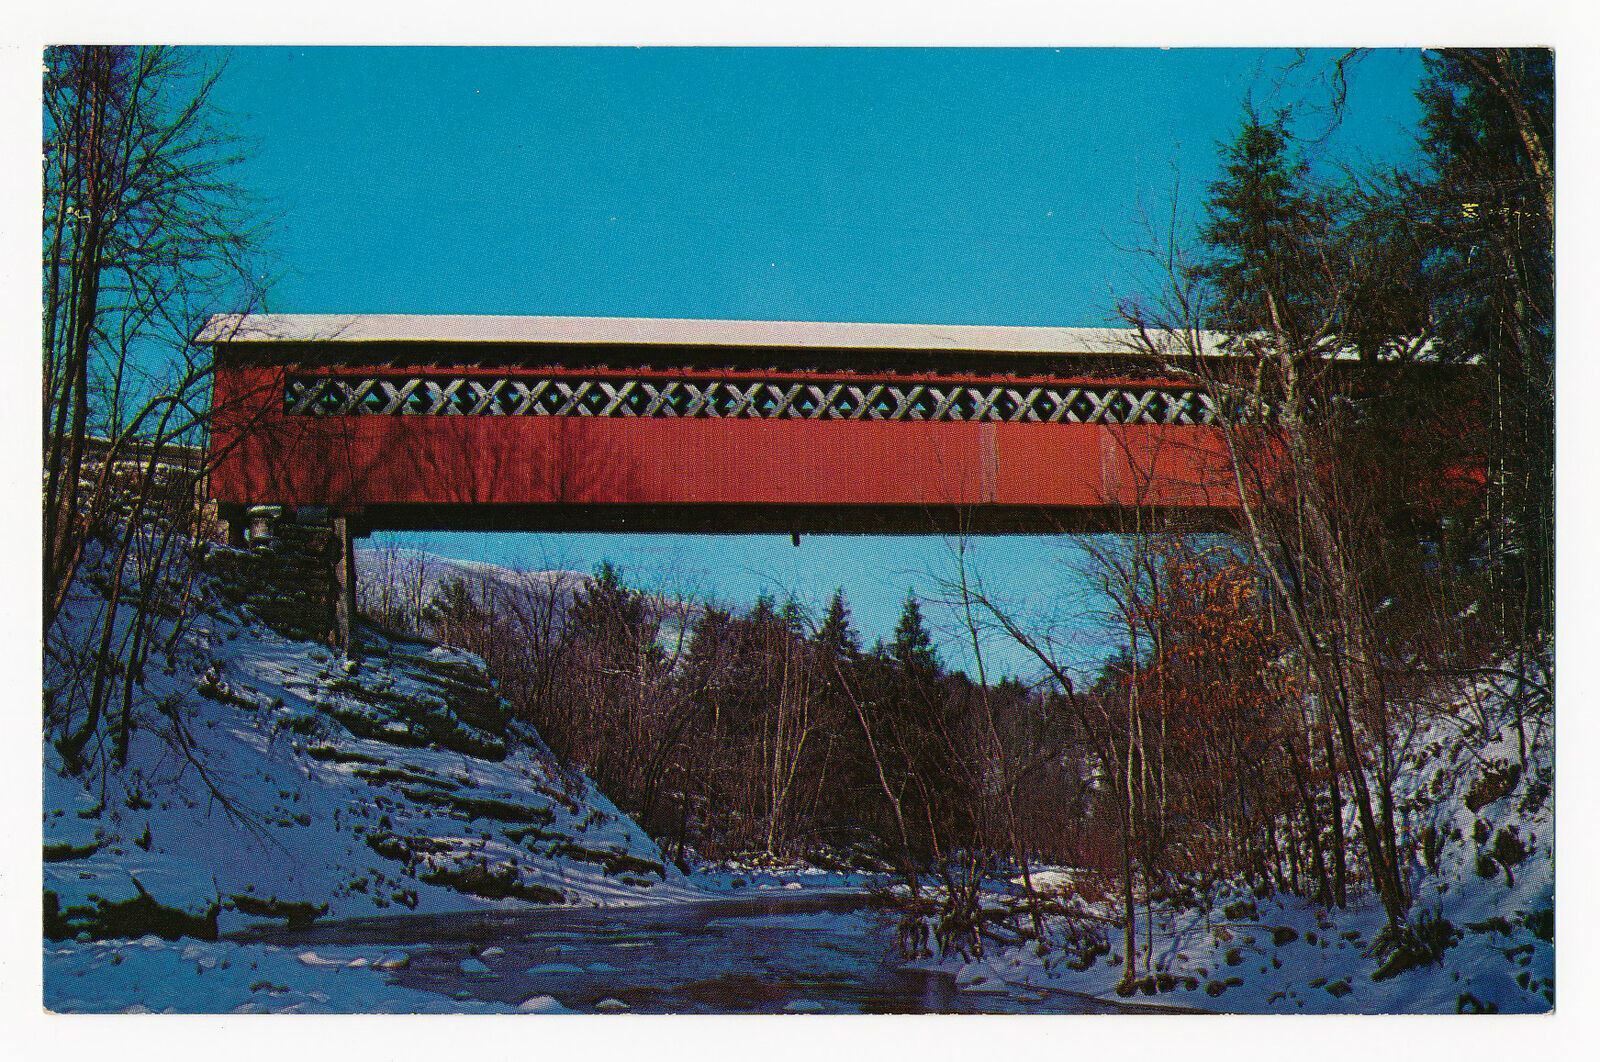 Chiselville Covered Bridge, East Arlington, Vermont